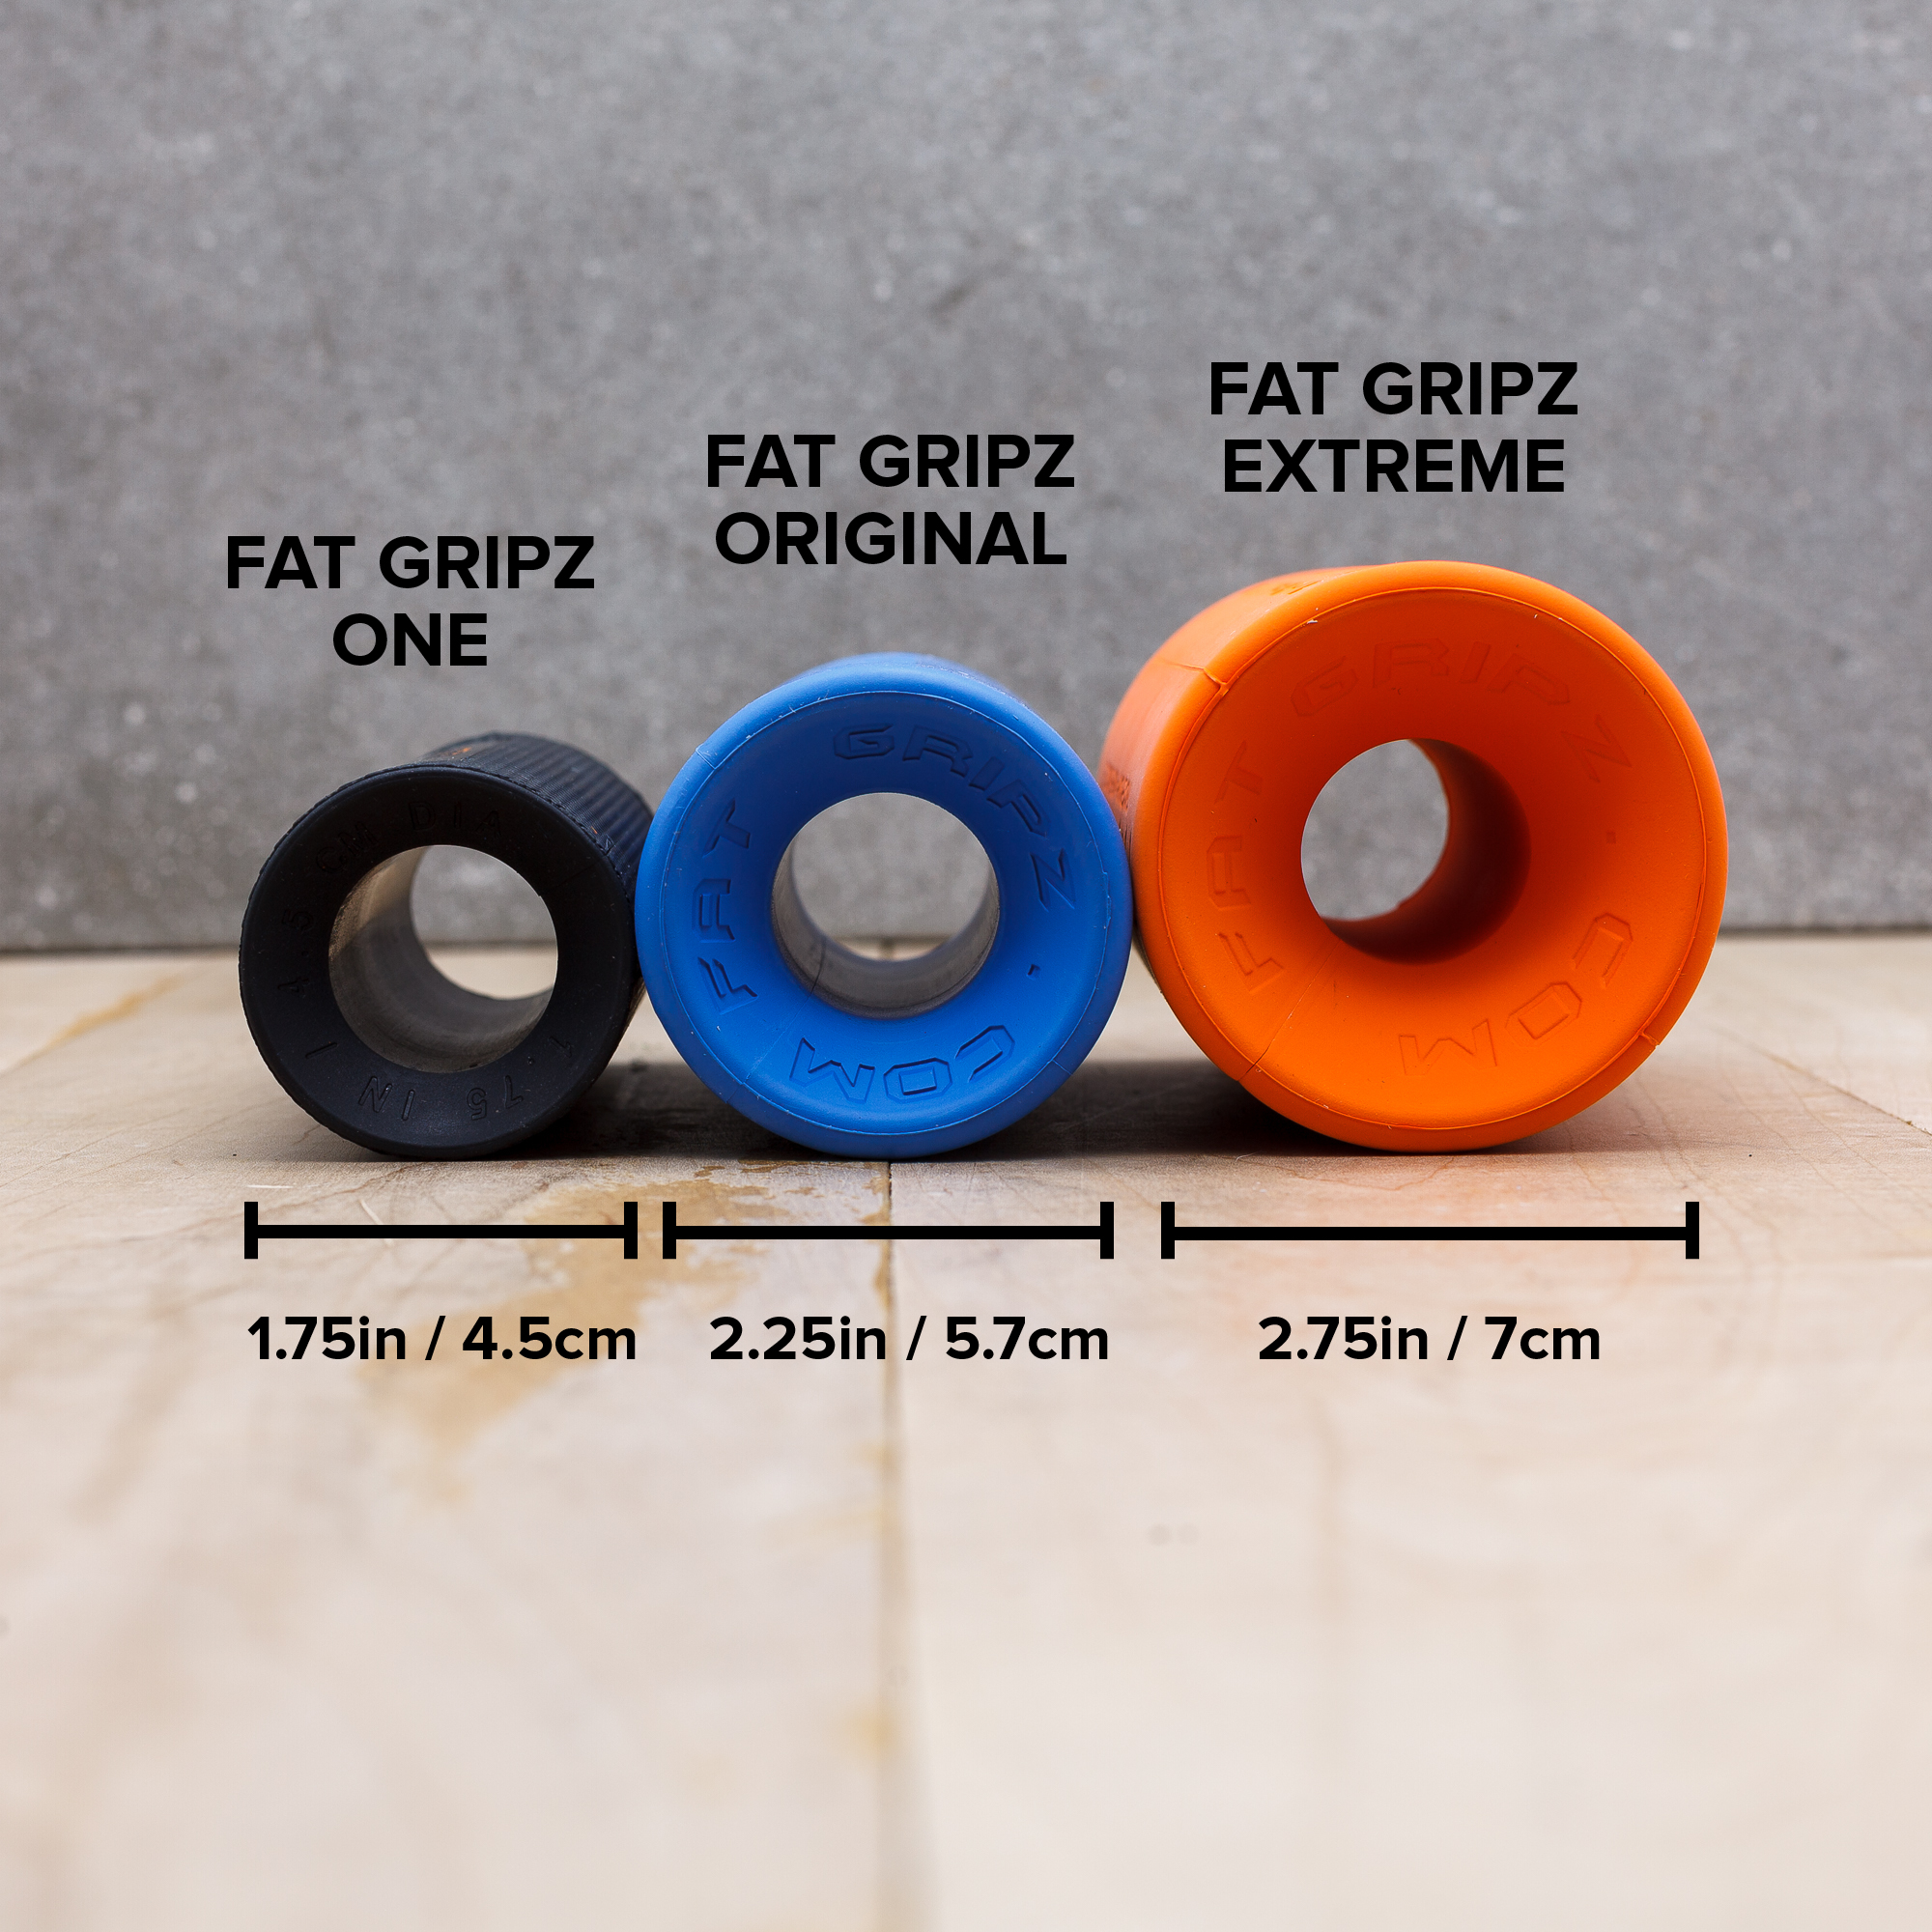 Fat Gripz One Series 